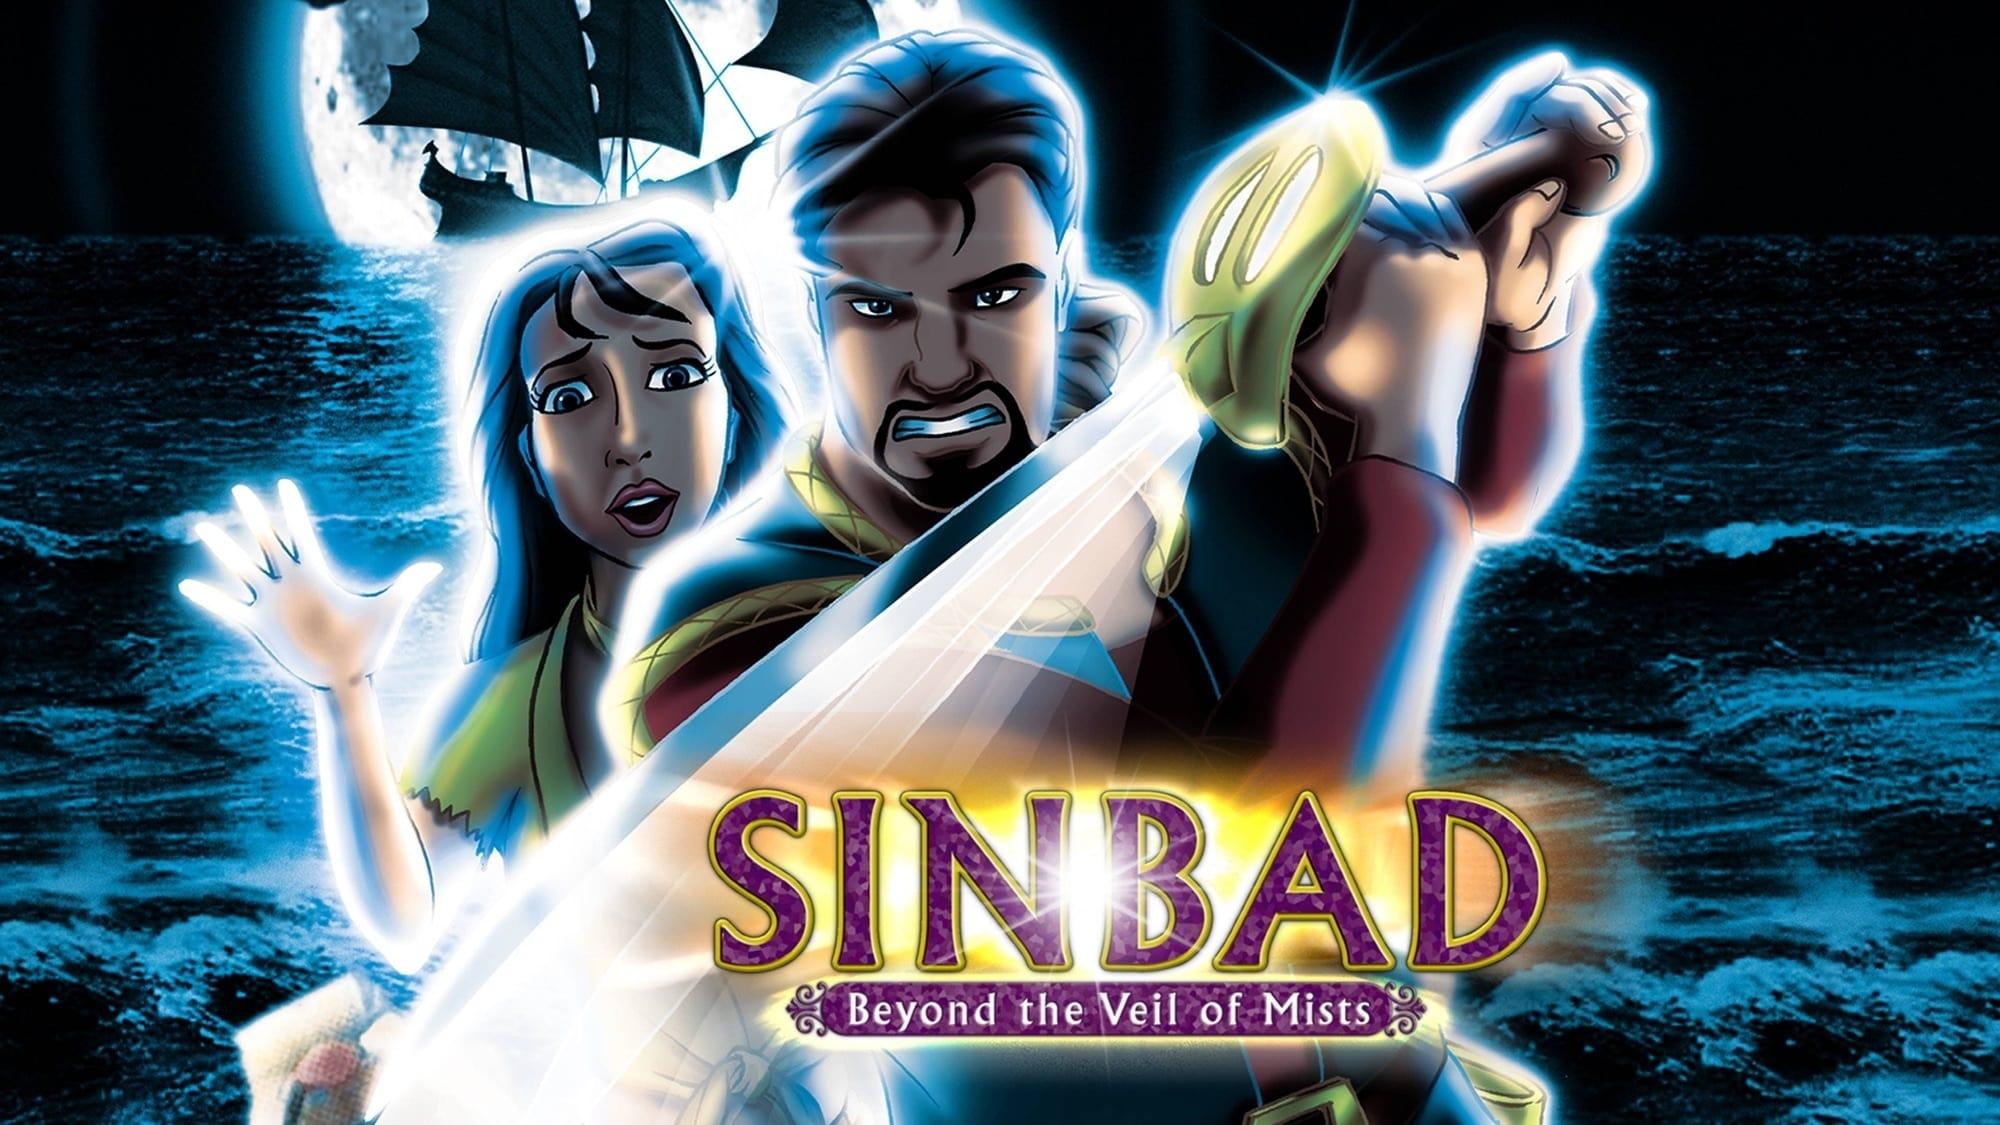 Sinbad: Beyond the Veil of Mists backdrop